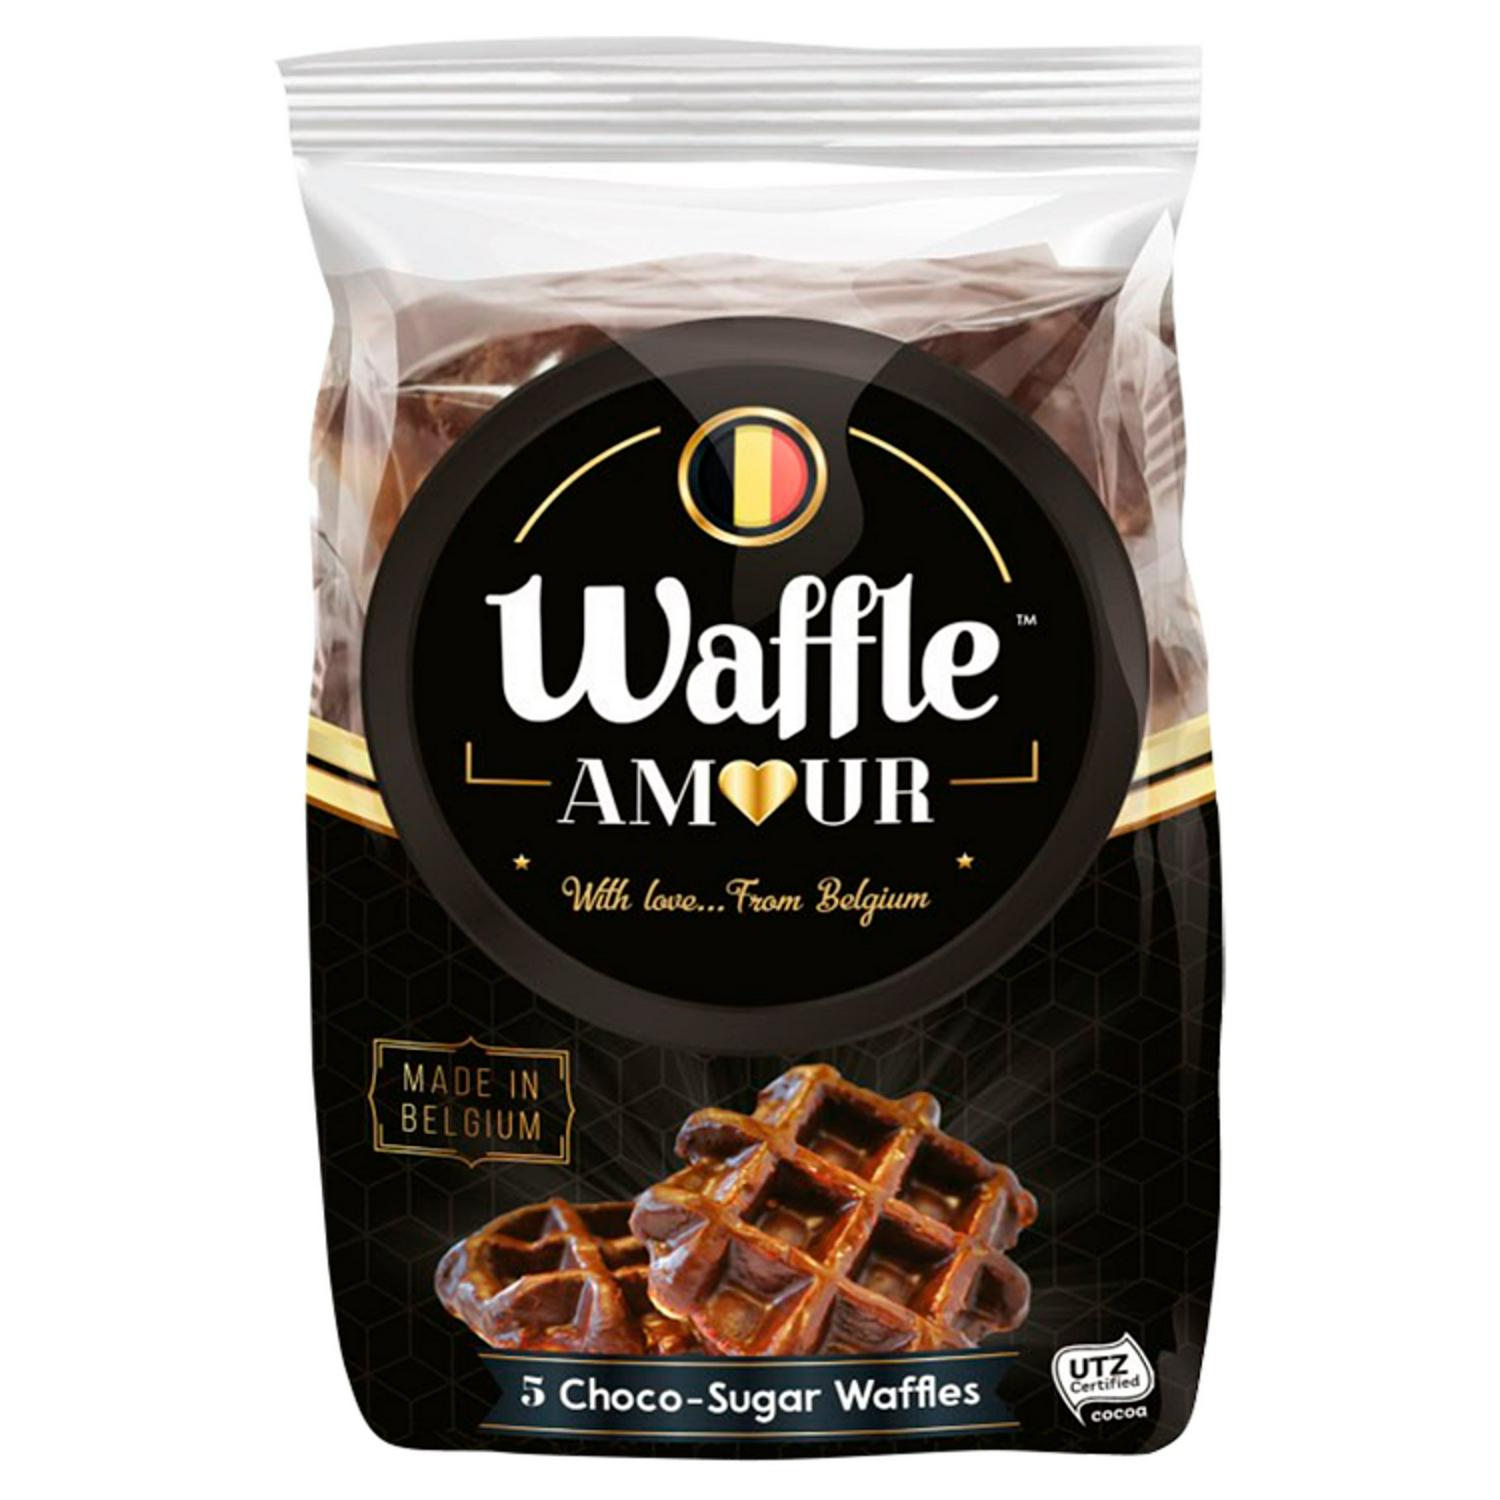 Waffle Amour Choco-Sugar Waffles 5x 60g (Nov 23) RRP £1.69 CLEARANCE XL 89p or 2 for £1.50